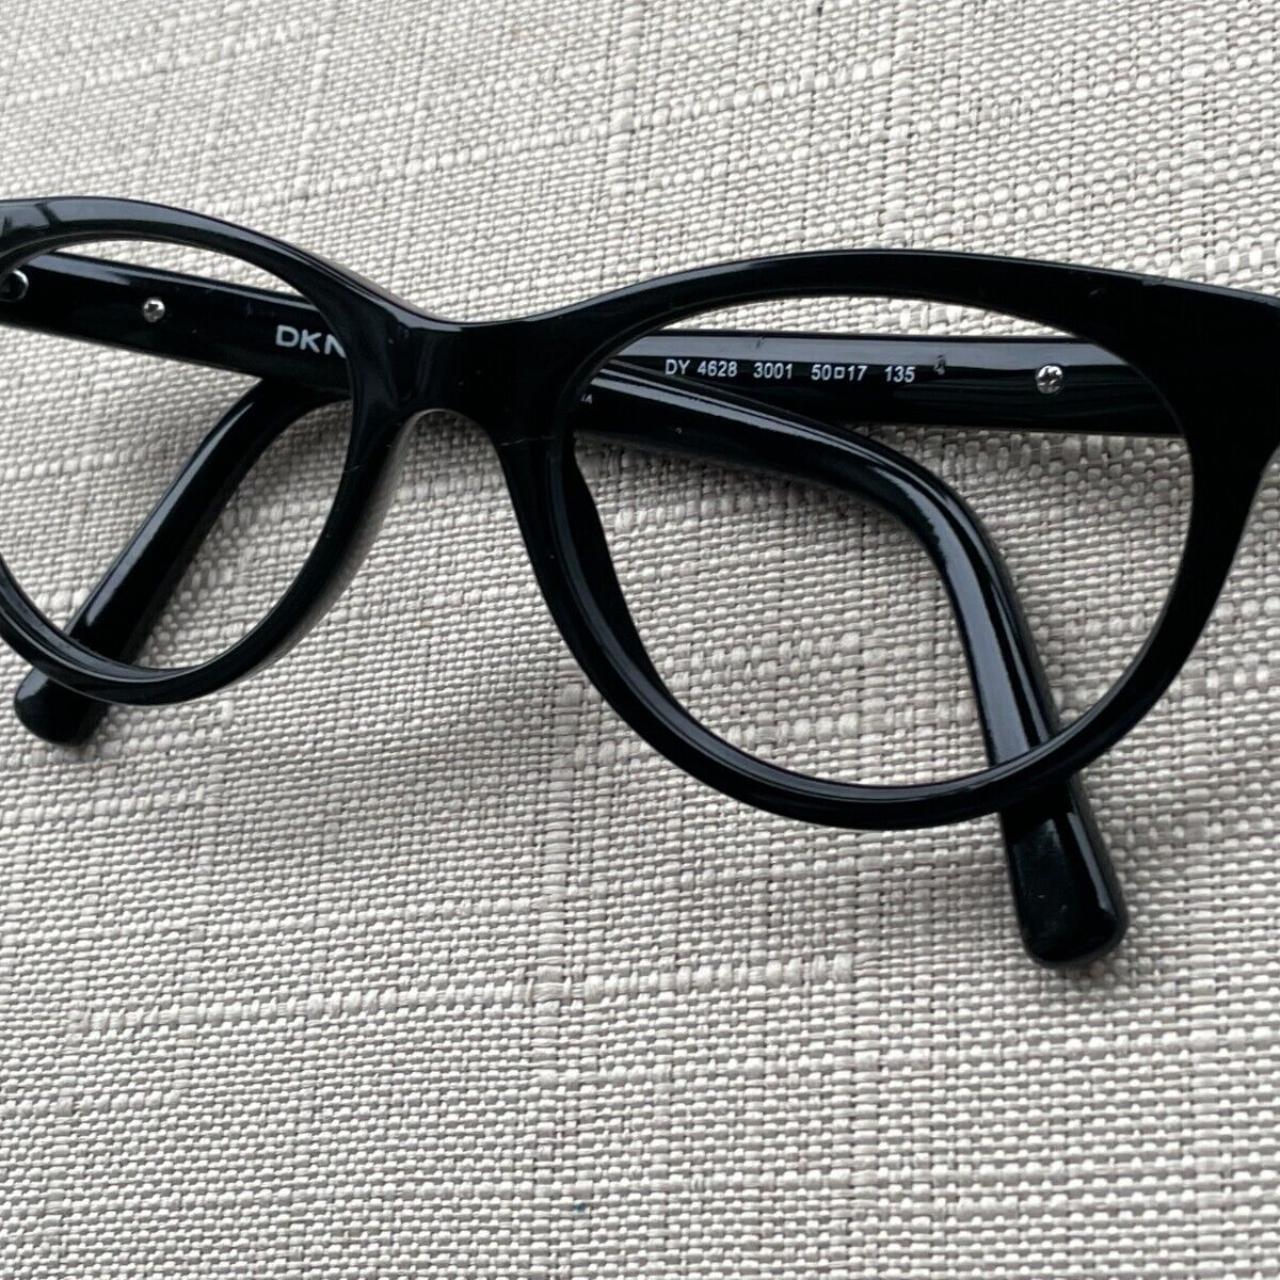 DKNY Women's Black Sunglasses (2)